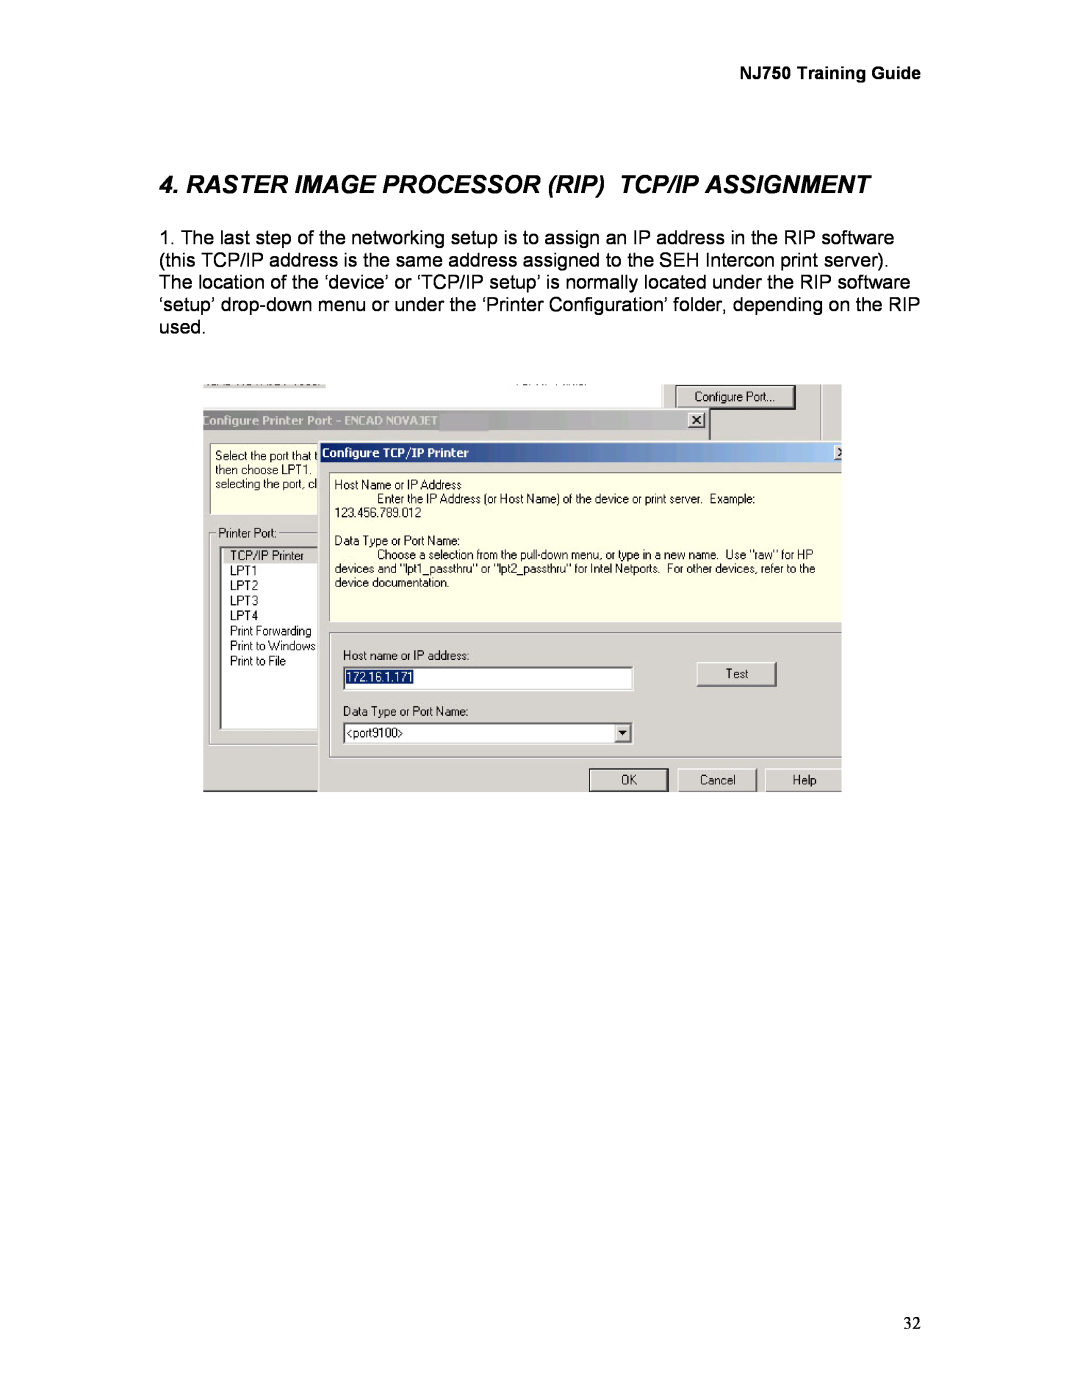 Kodak 750 manual Raster Image Processor Rip Tcp/Ip Assignment 